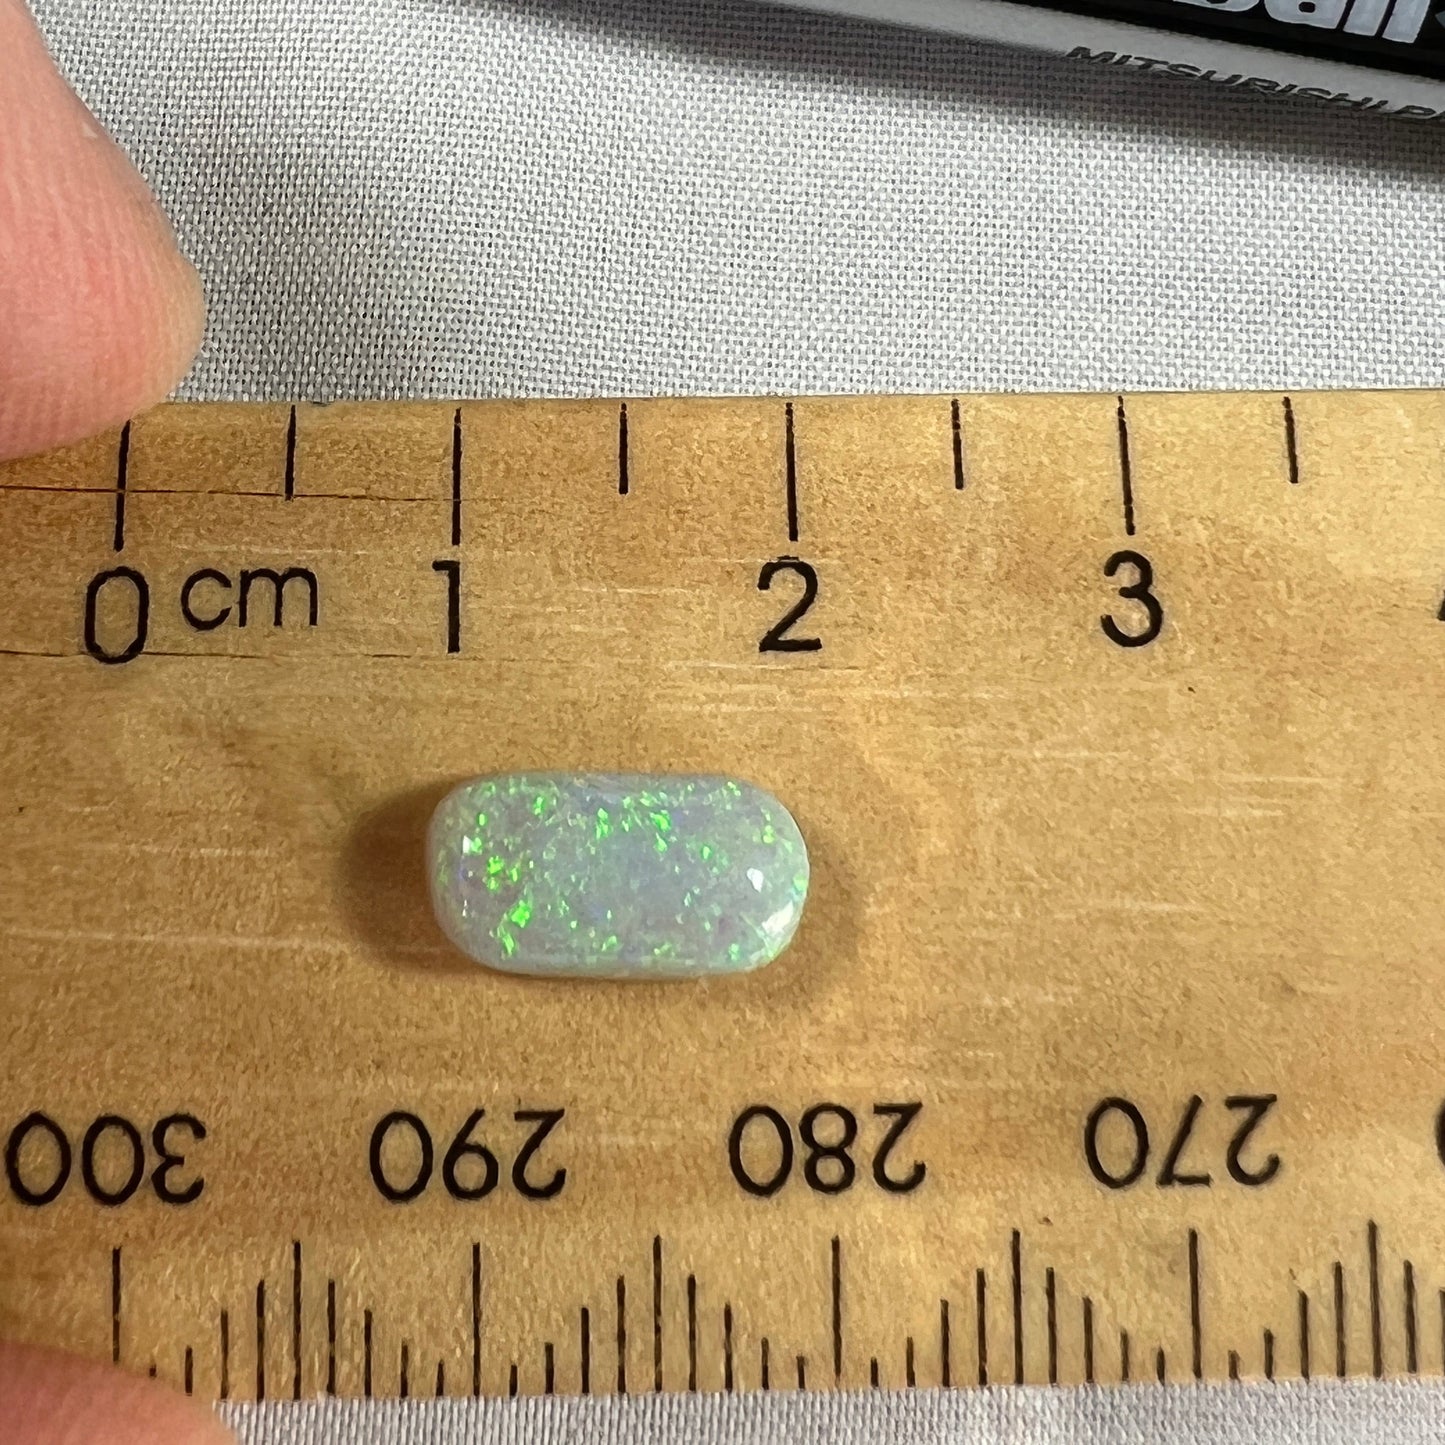 Lightning Ridge grey/green solid opal ready for setting.